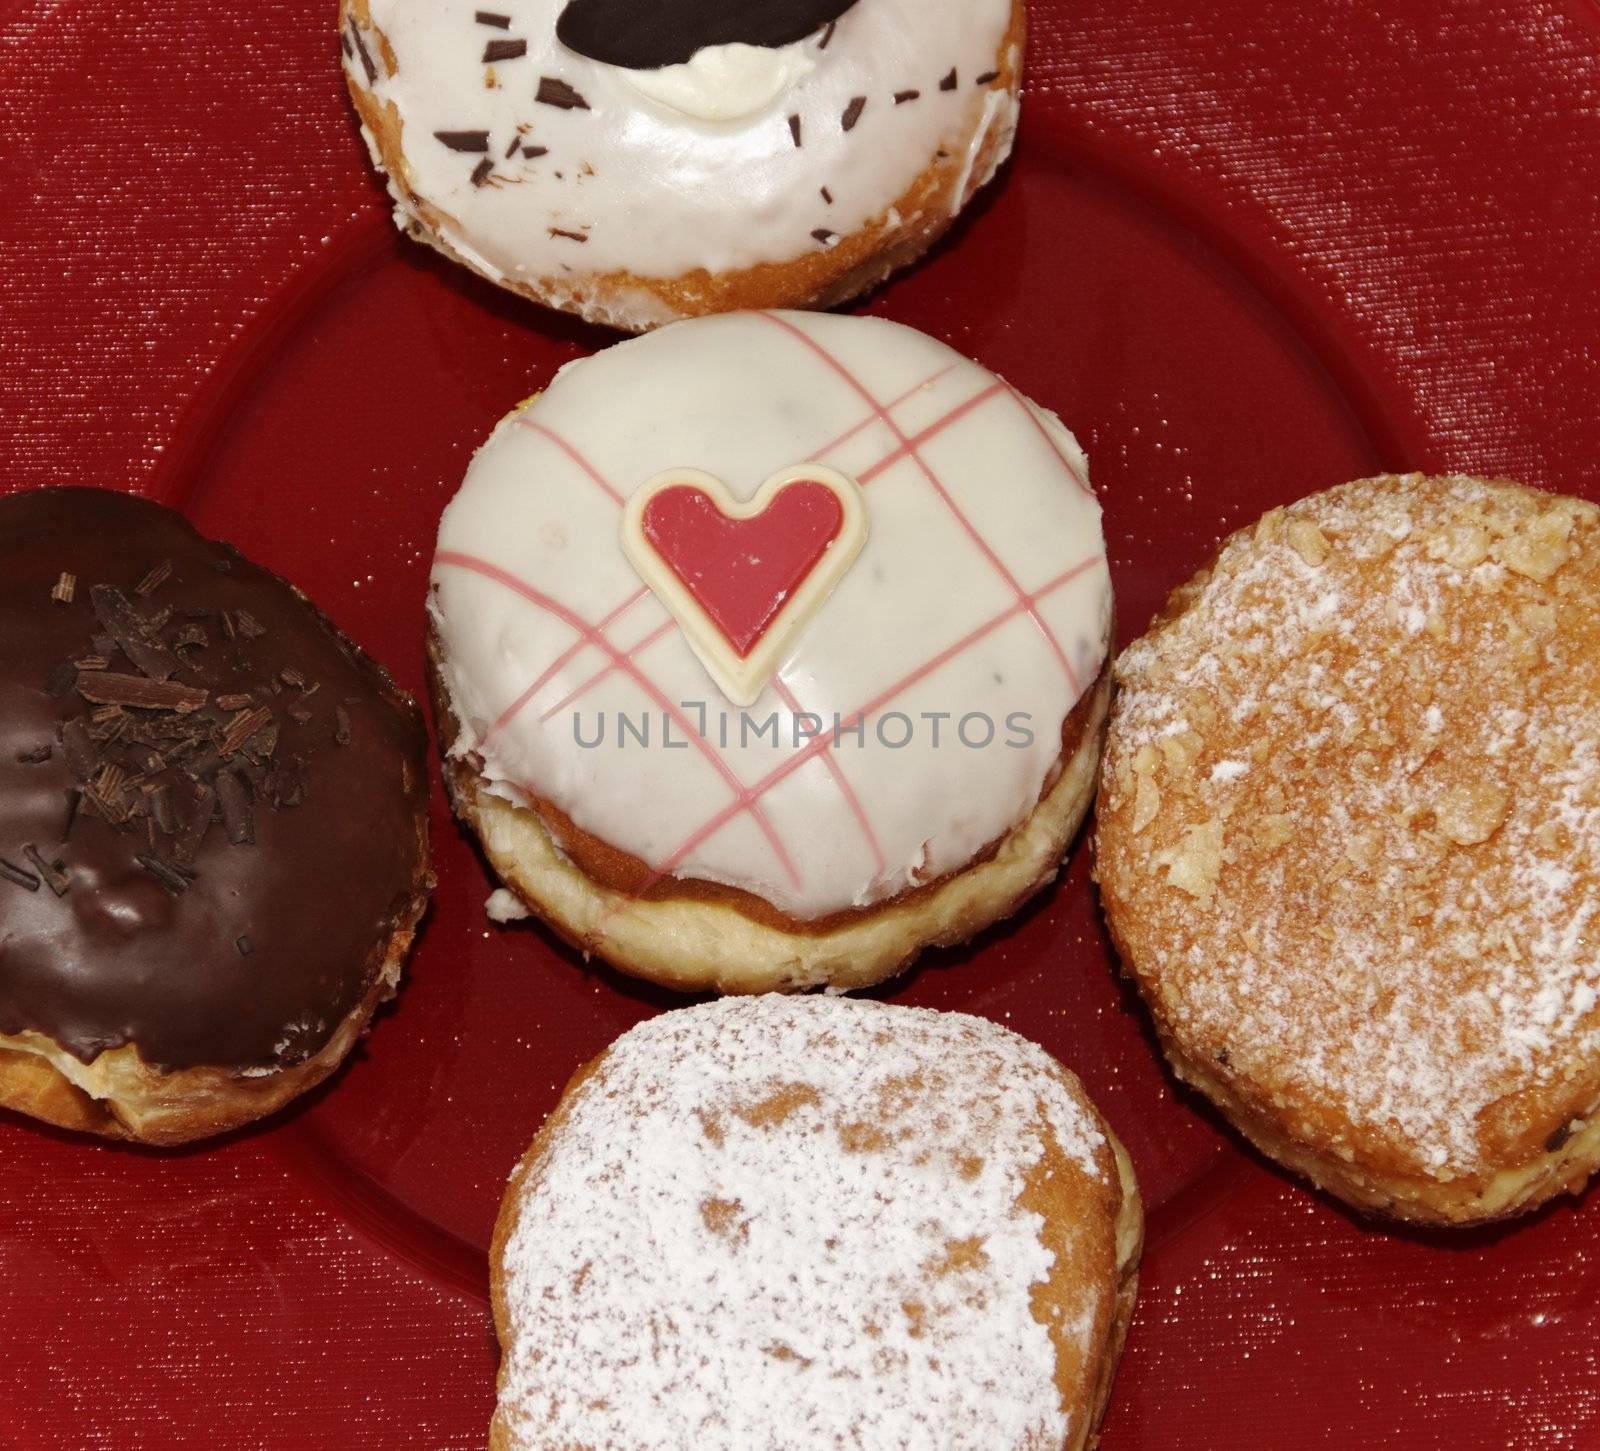 five various bavarian donuts